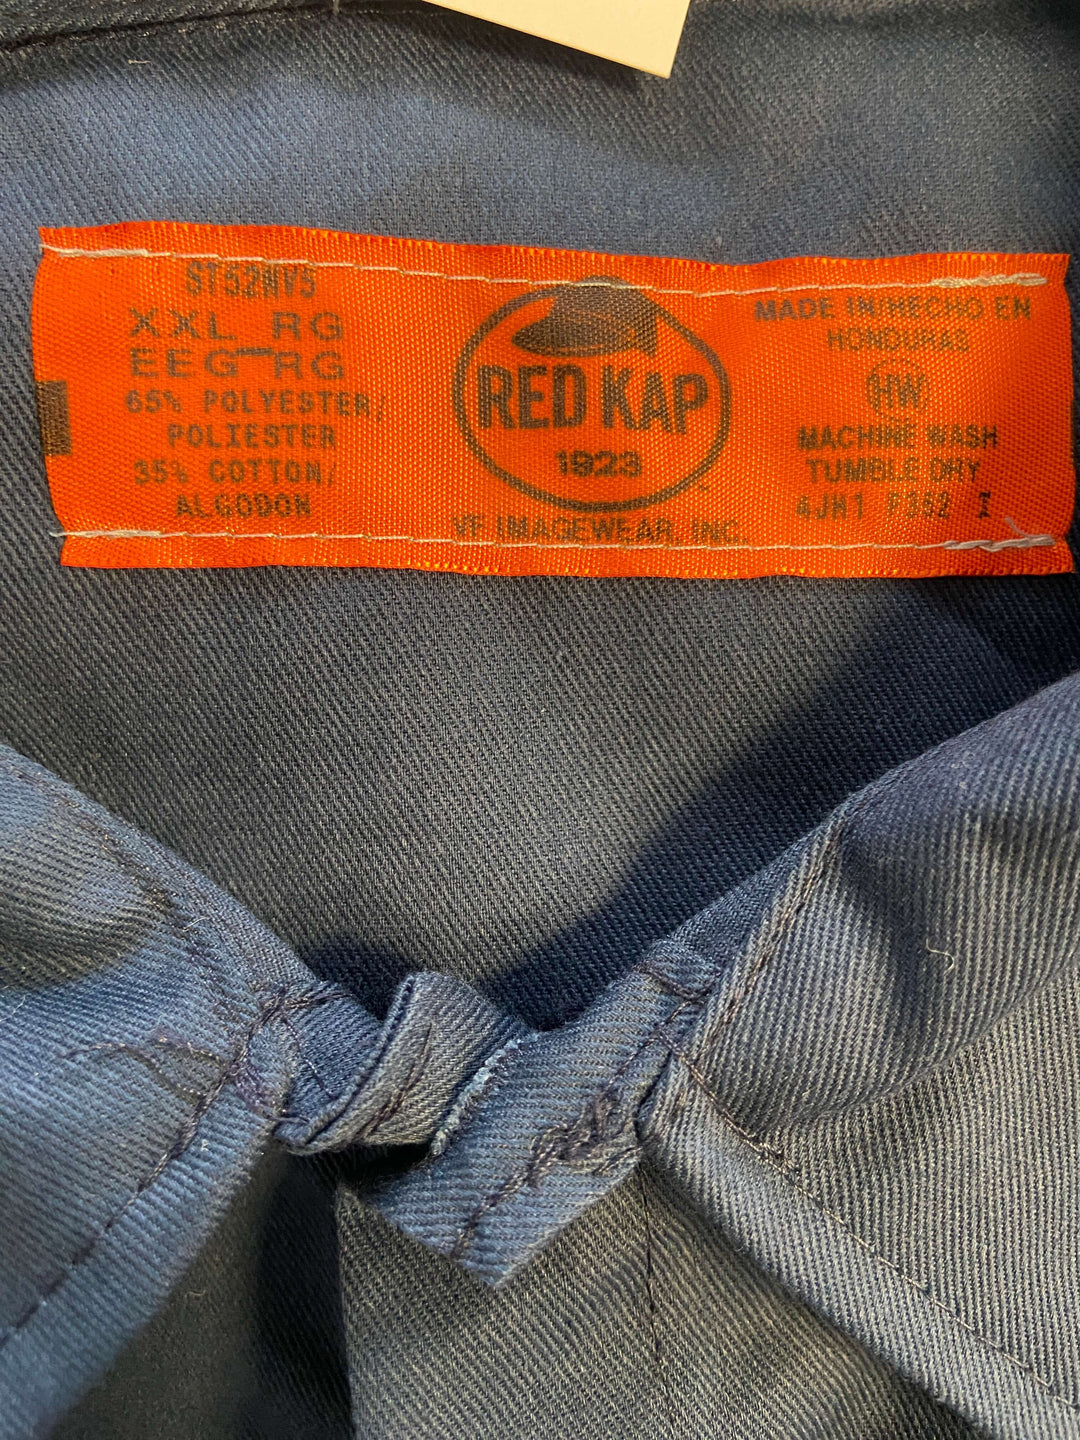 Men Red Kap Work Shirt vintage 00s deadstock navy blue long sleeve cotton blend chore shirt NOS american workwear size extra extra large XXL